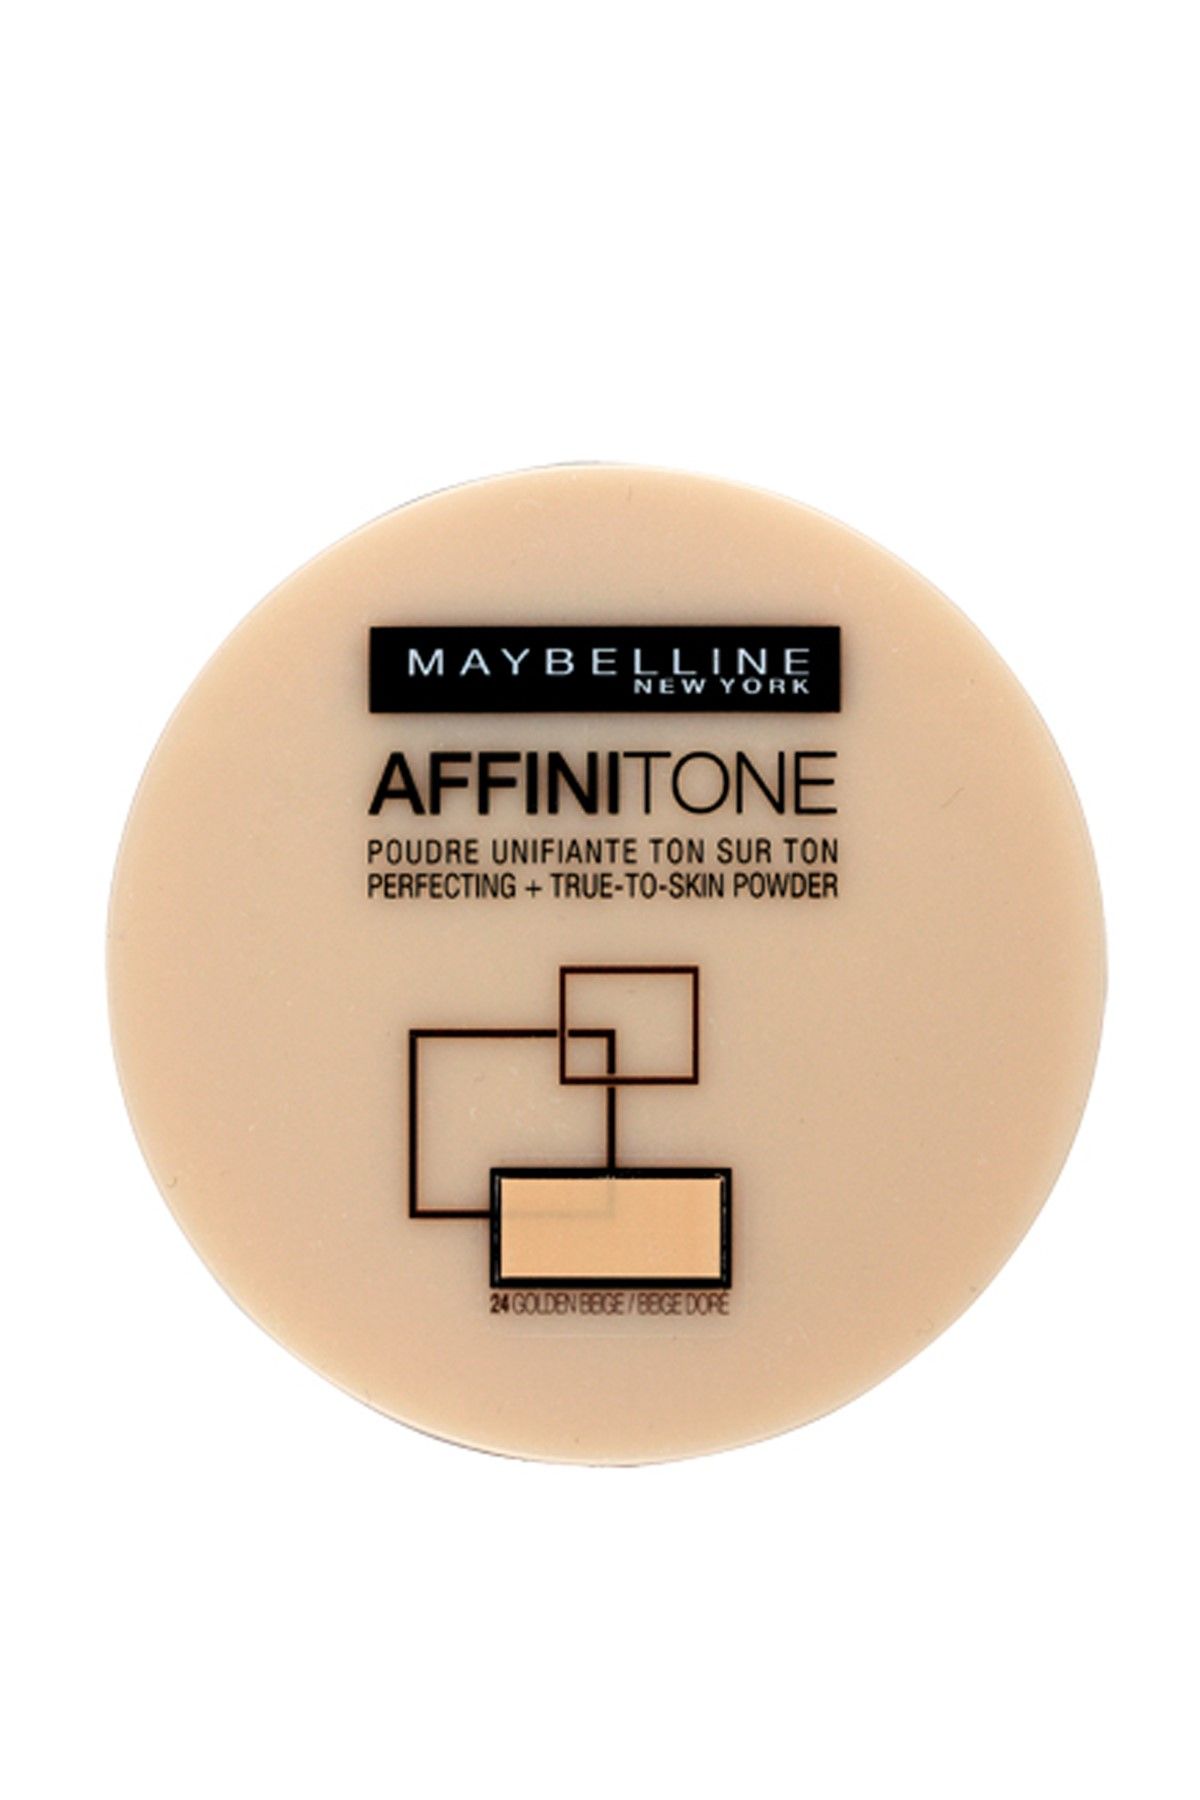 Maybelline New York پنکک و پودر آرایشی Affinitone Powder کاملا سبک و پوشش طبیعی شماره 20